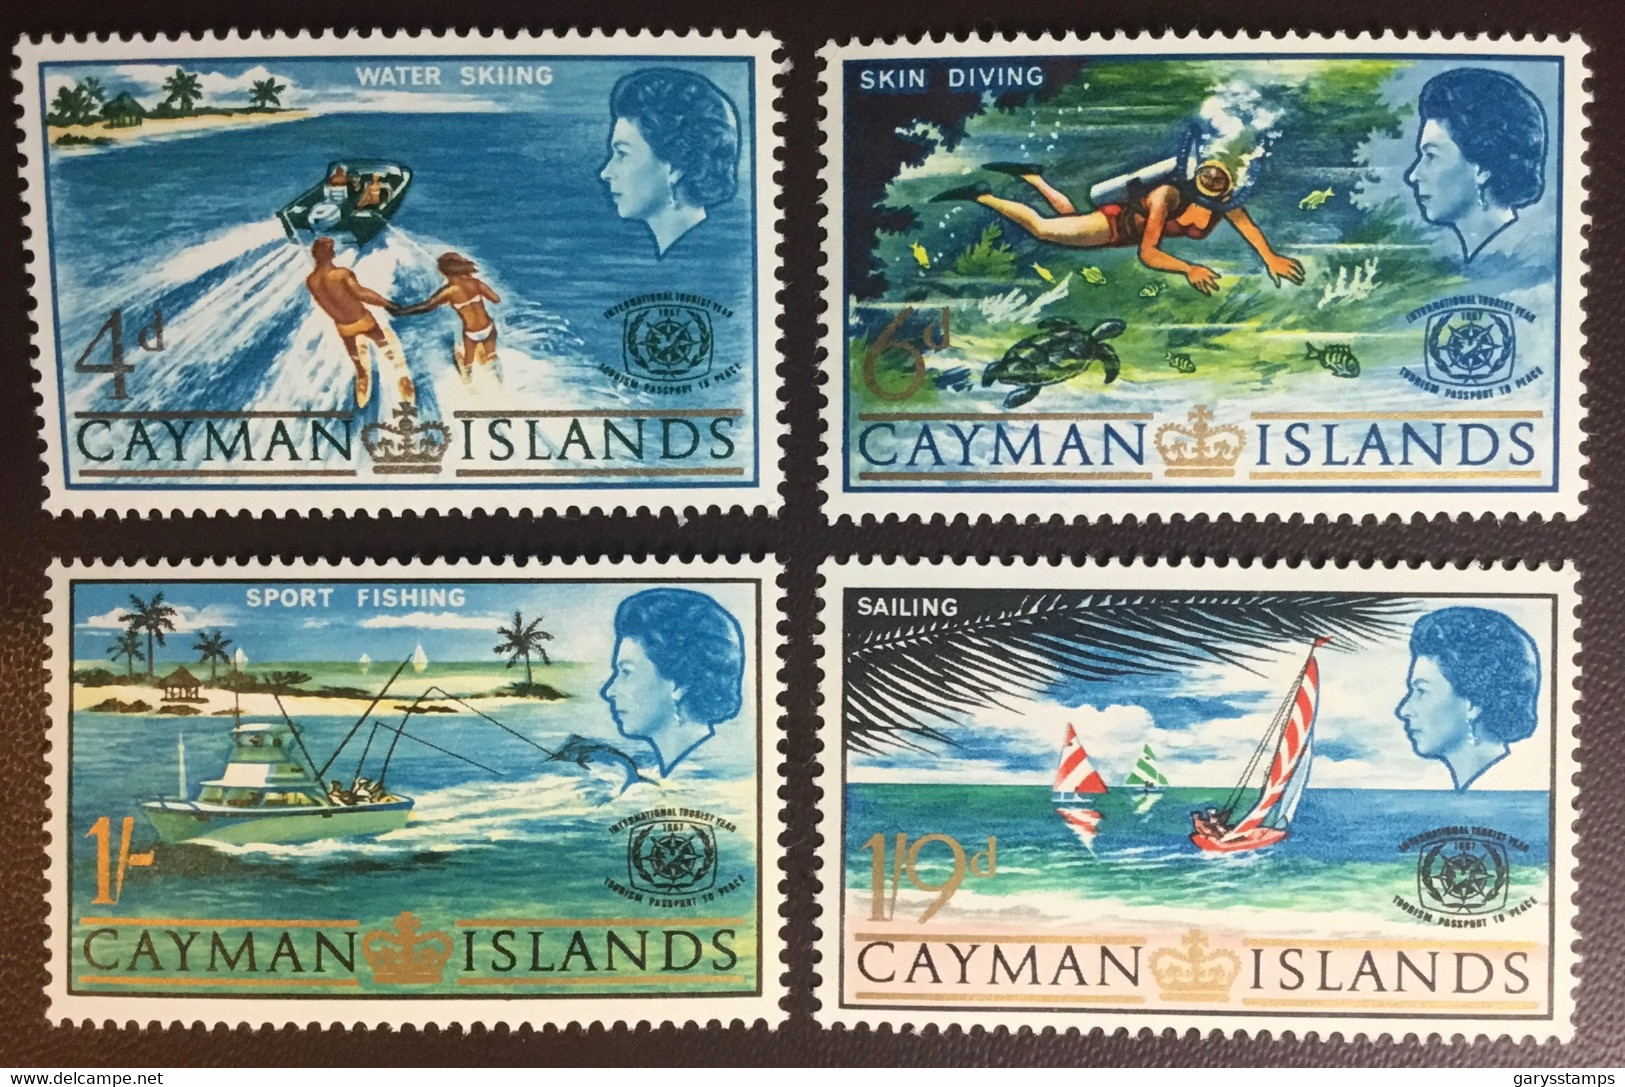 Cayman Islands 1967 Tourism Marine Life MNH - Caimán (Islas)